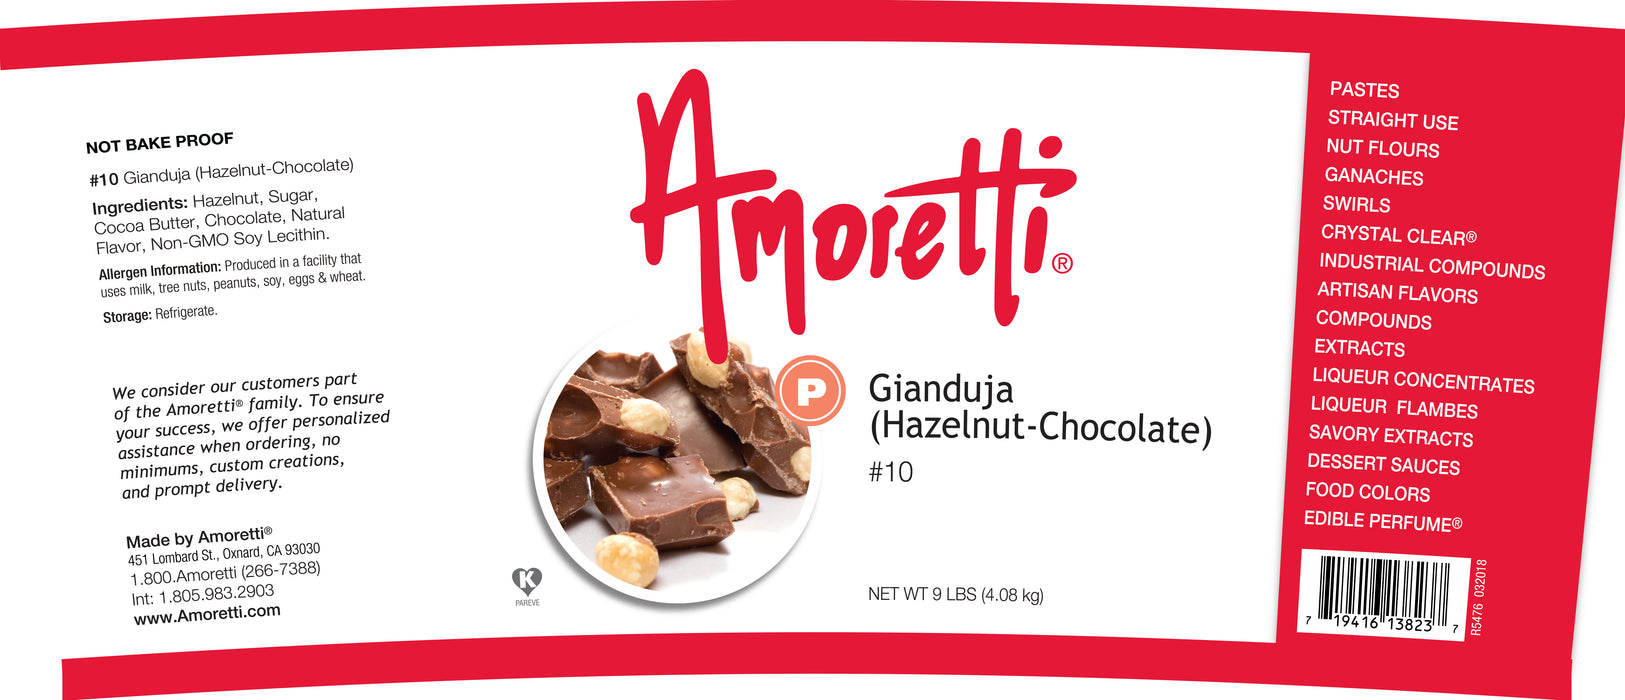 Gianduja (Hazelnut-Chocolate) (not bake-proof)